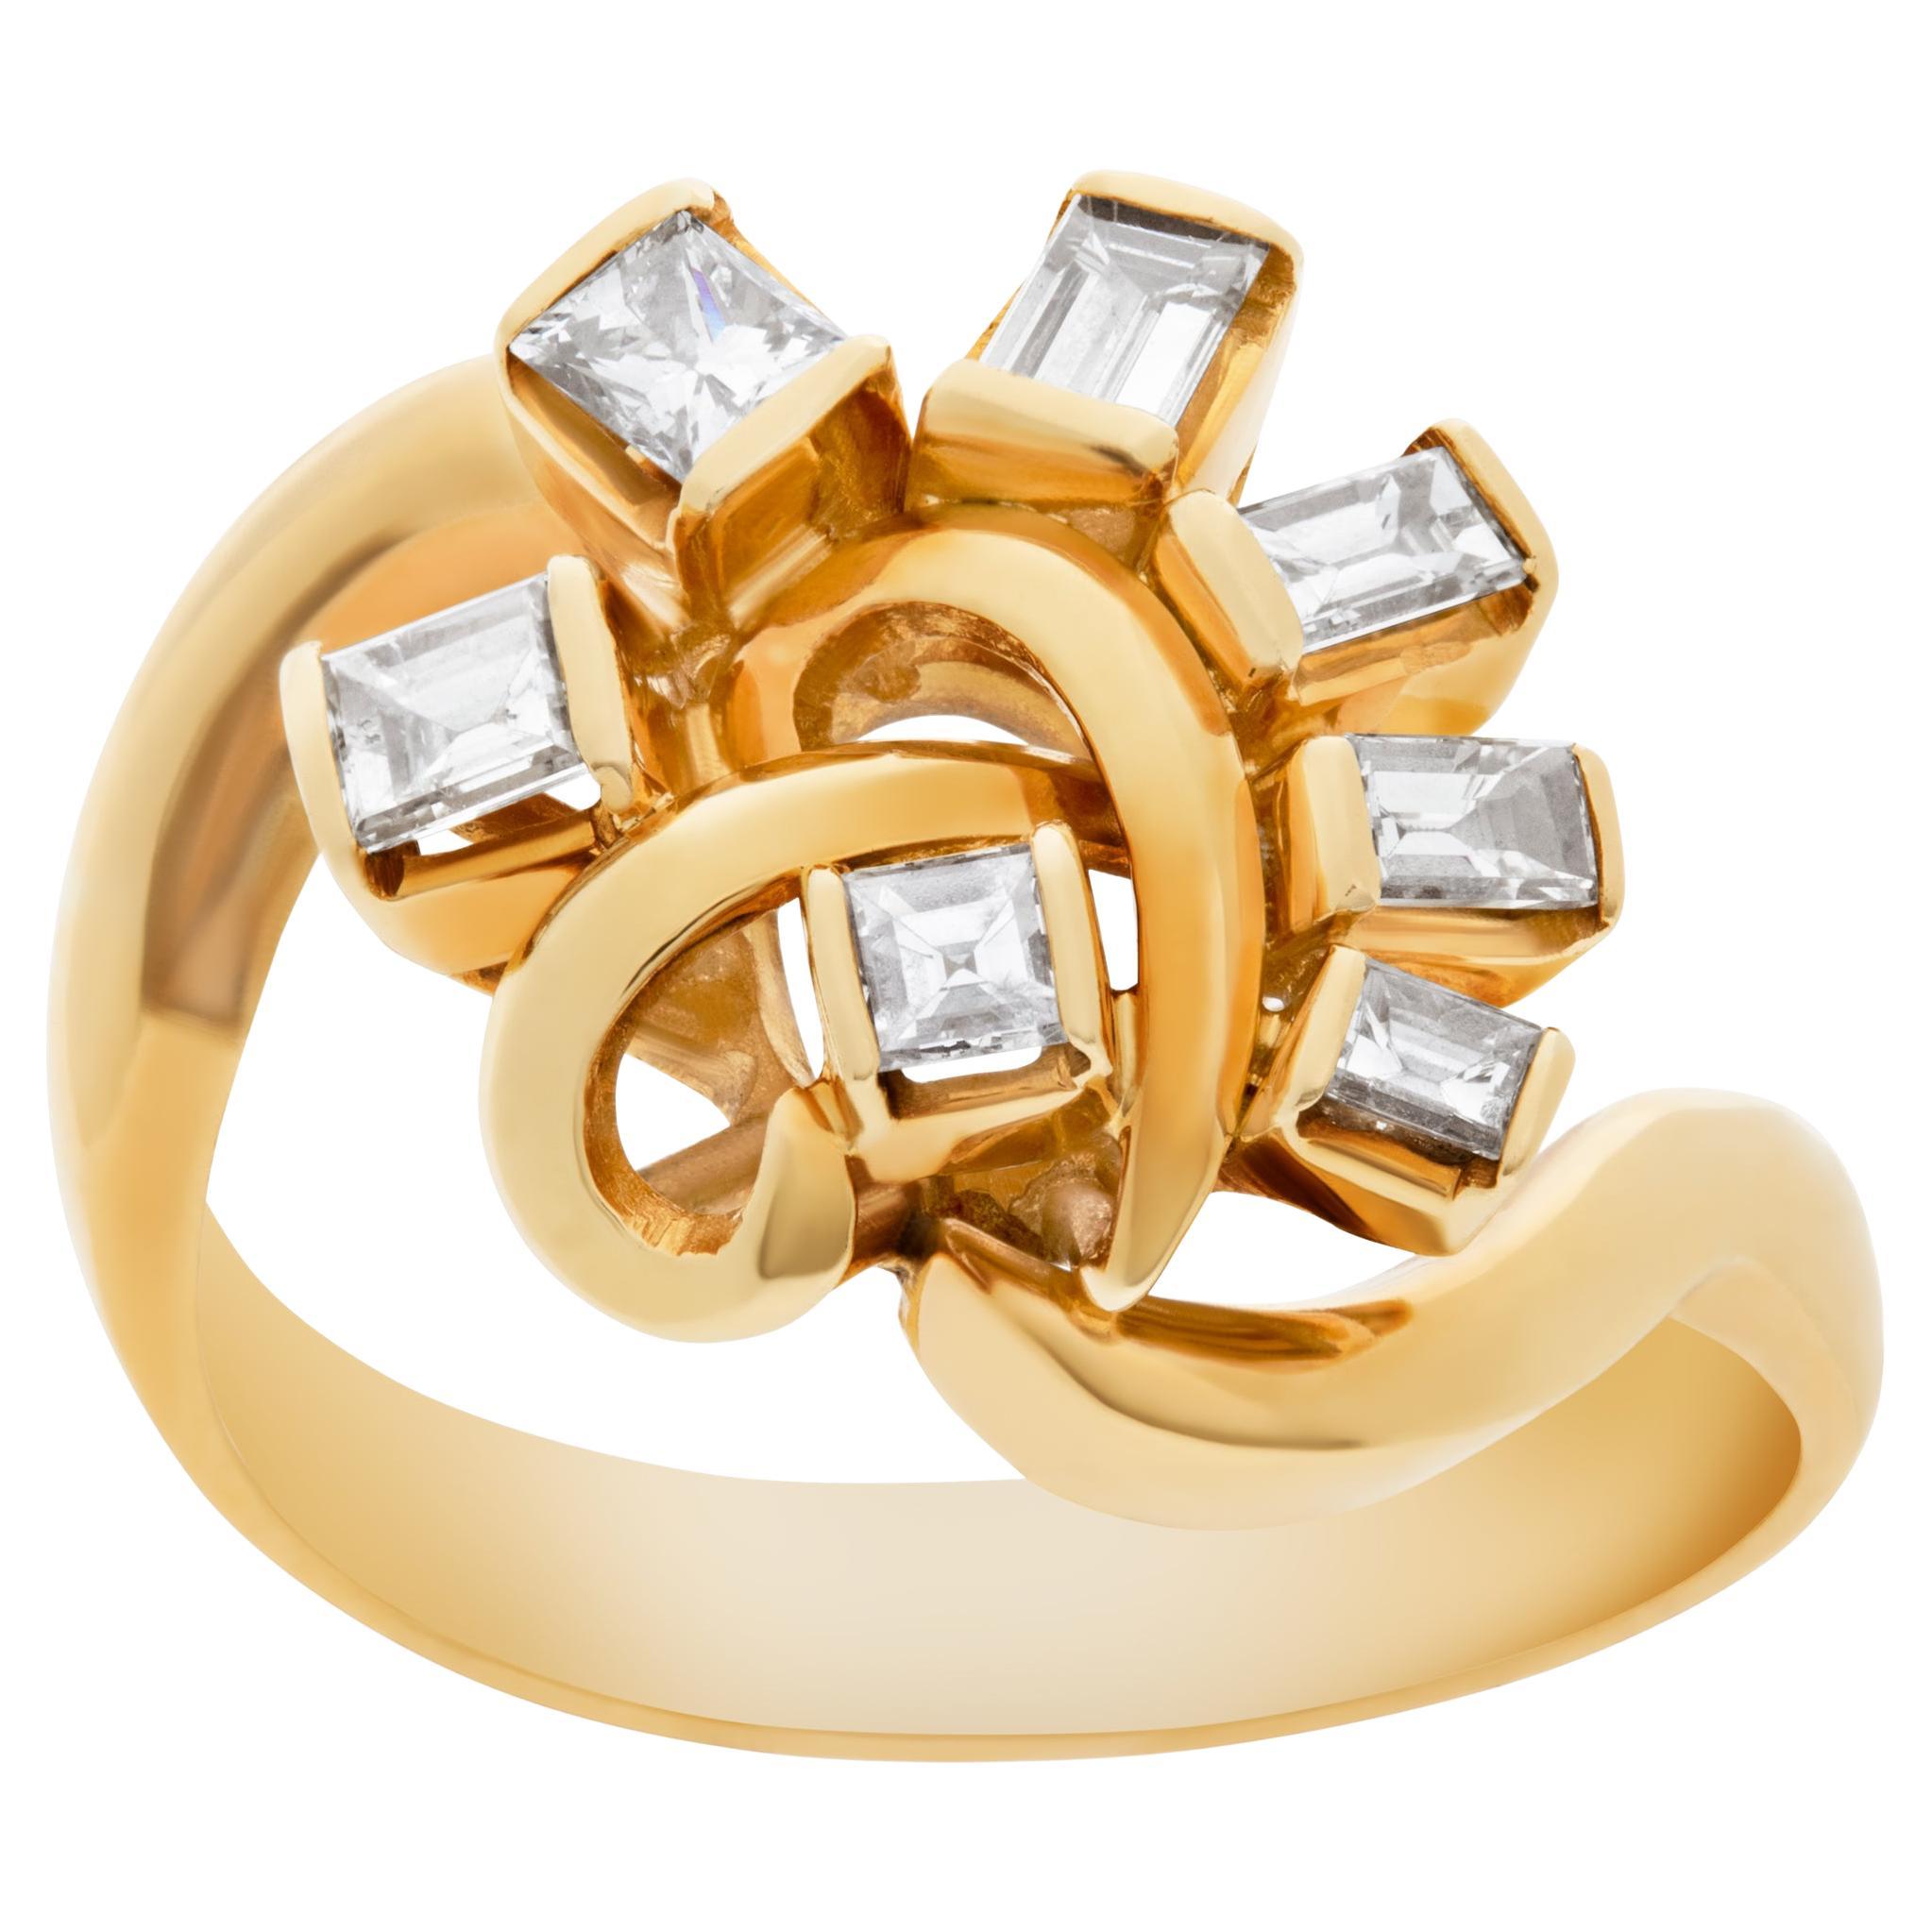 Bague tourbillon avec diamants sertis en or jaune 18 carats